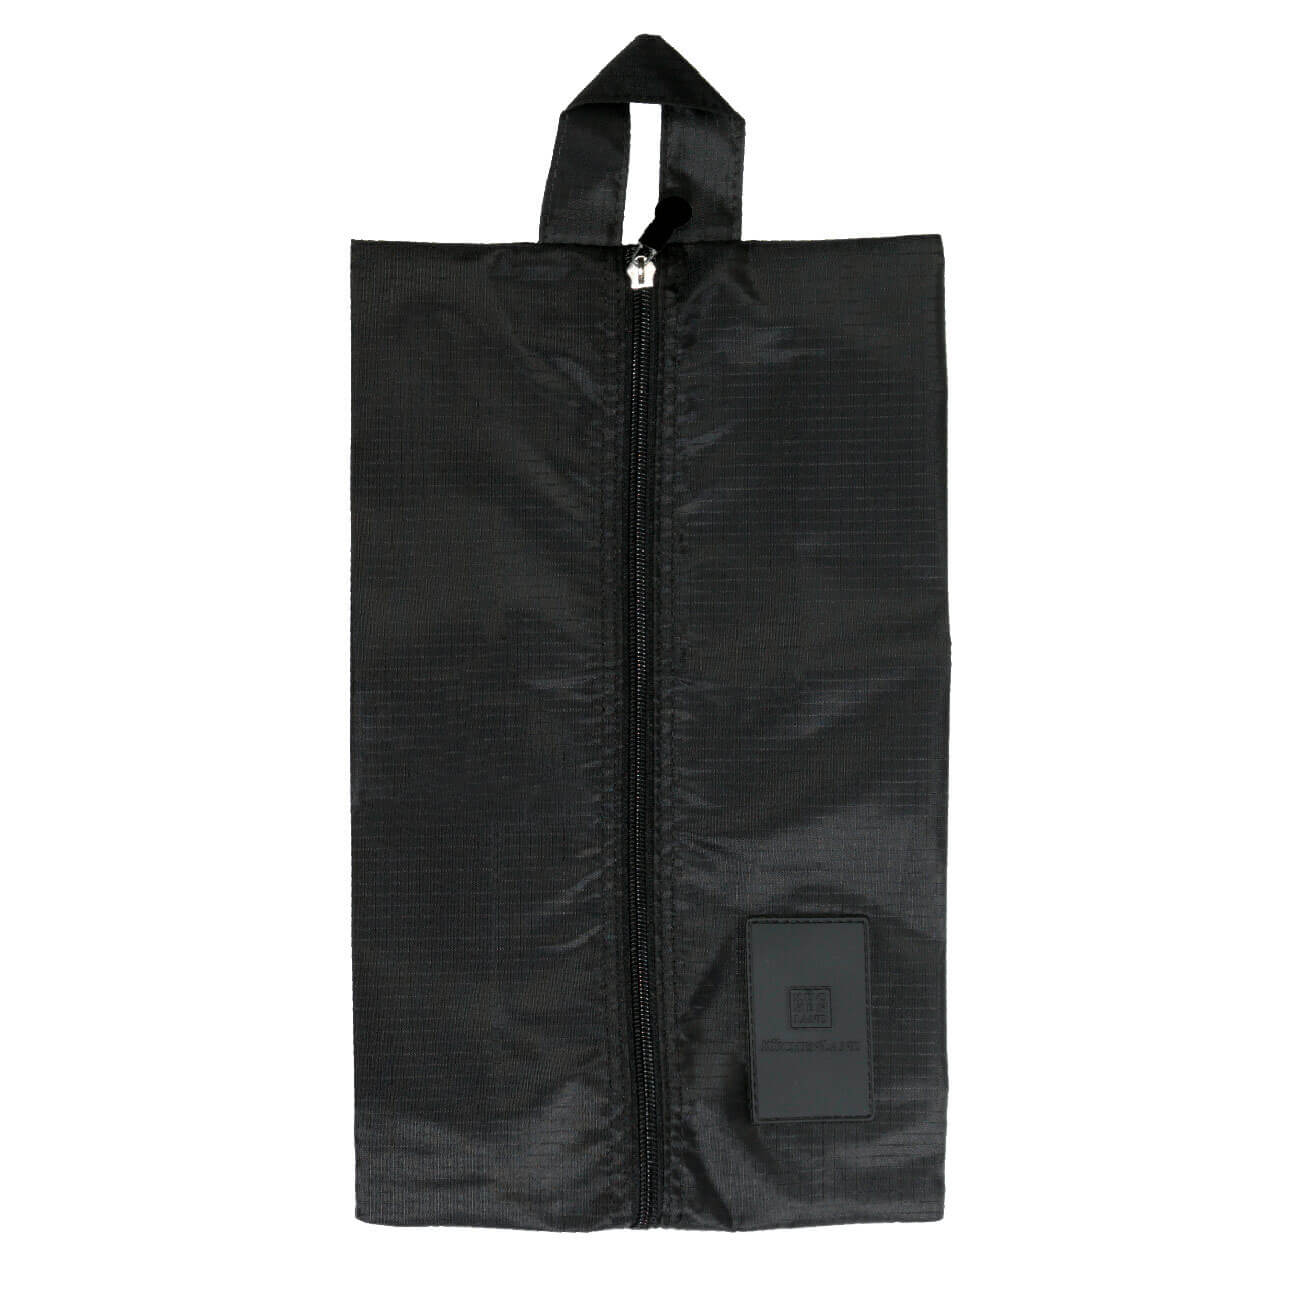 Kuchenland Органайзер для обуви, 21х36х5 см, полиэстер, черный, Easy Travel сумка для обуви болоньевая